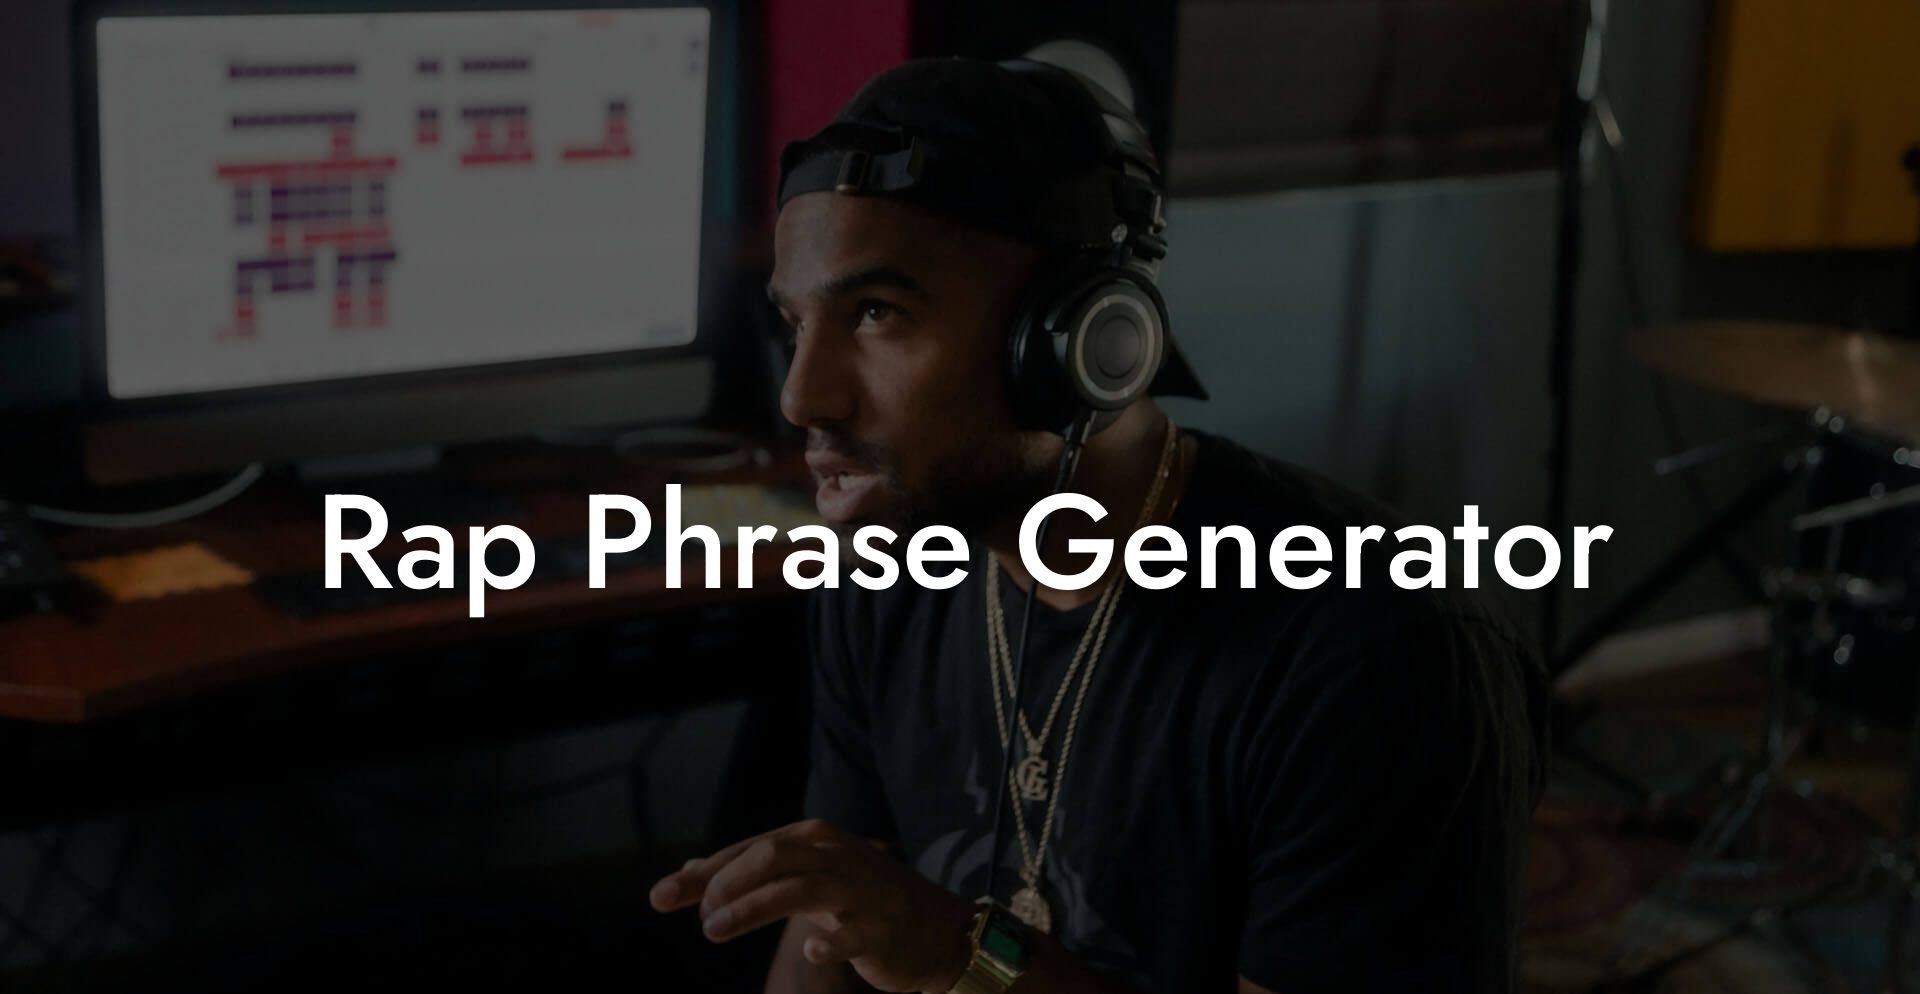 rap phrase generator lyric assistant